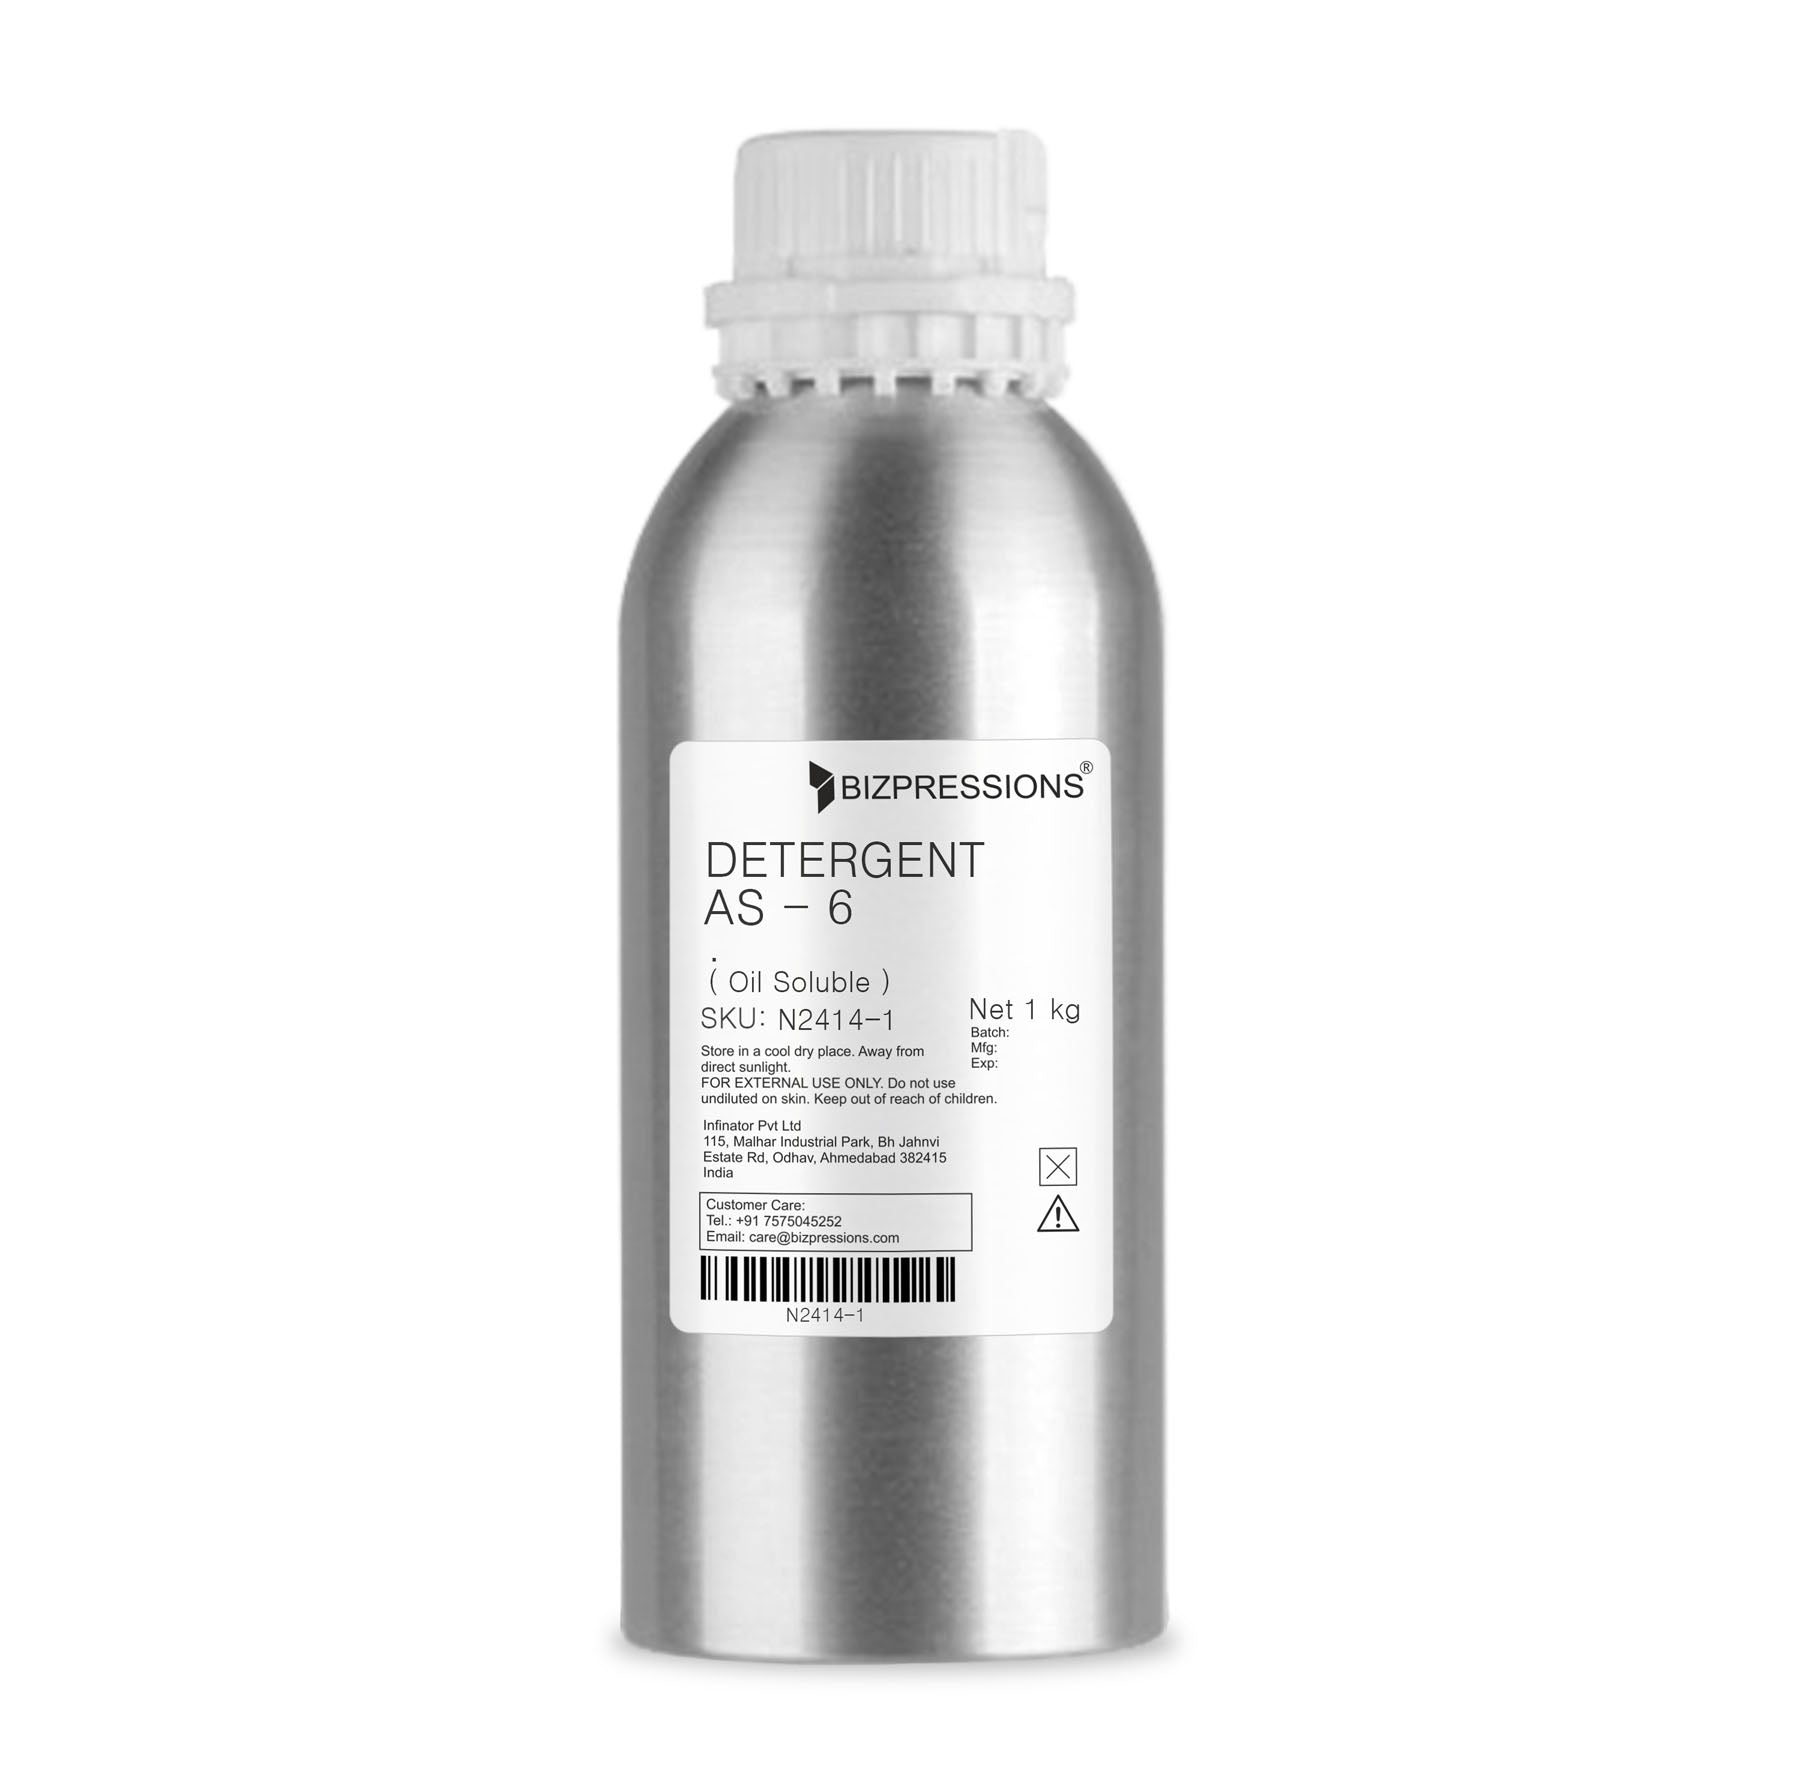 DETERGENT AS - 6 - Fragrance ( Oil Soluble ) - 1 kg